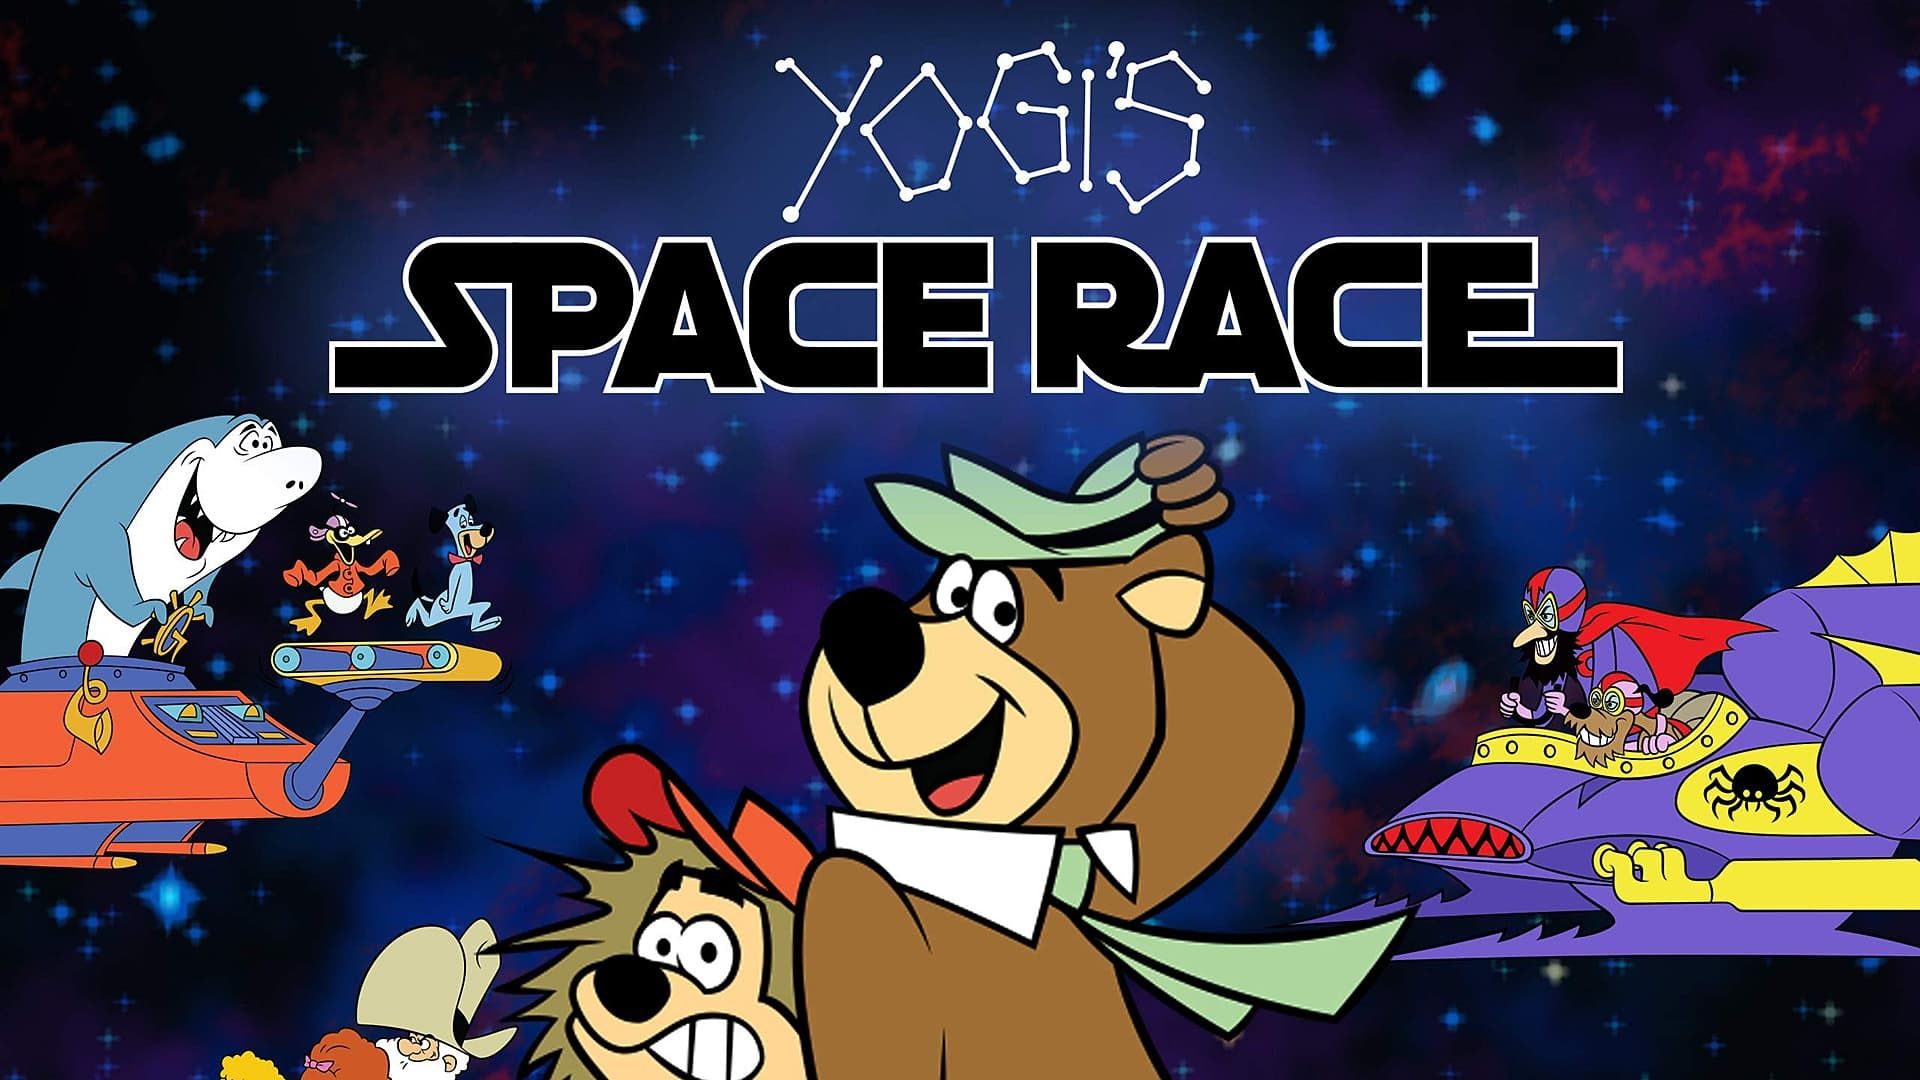 Yogi's Space Race background